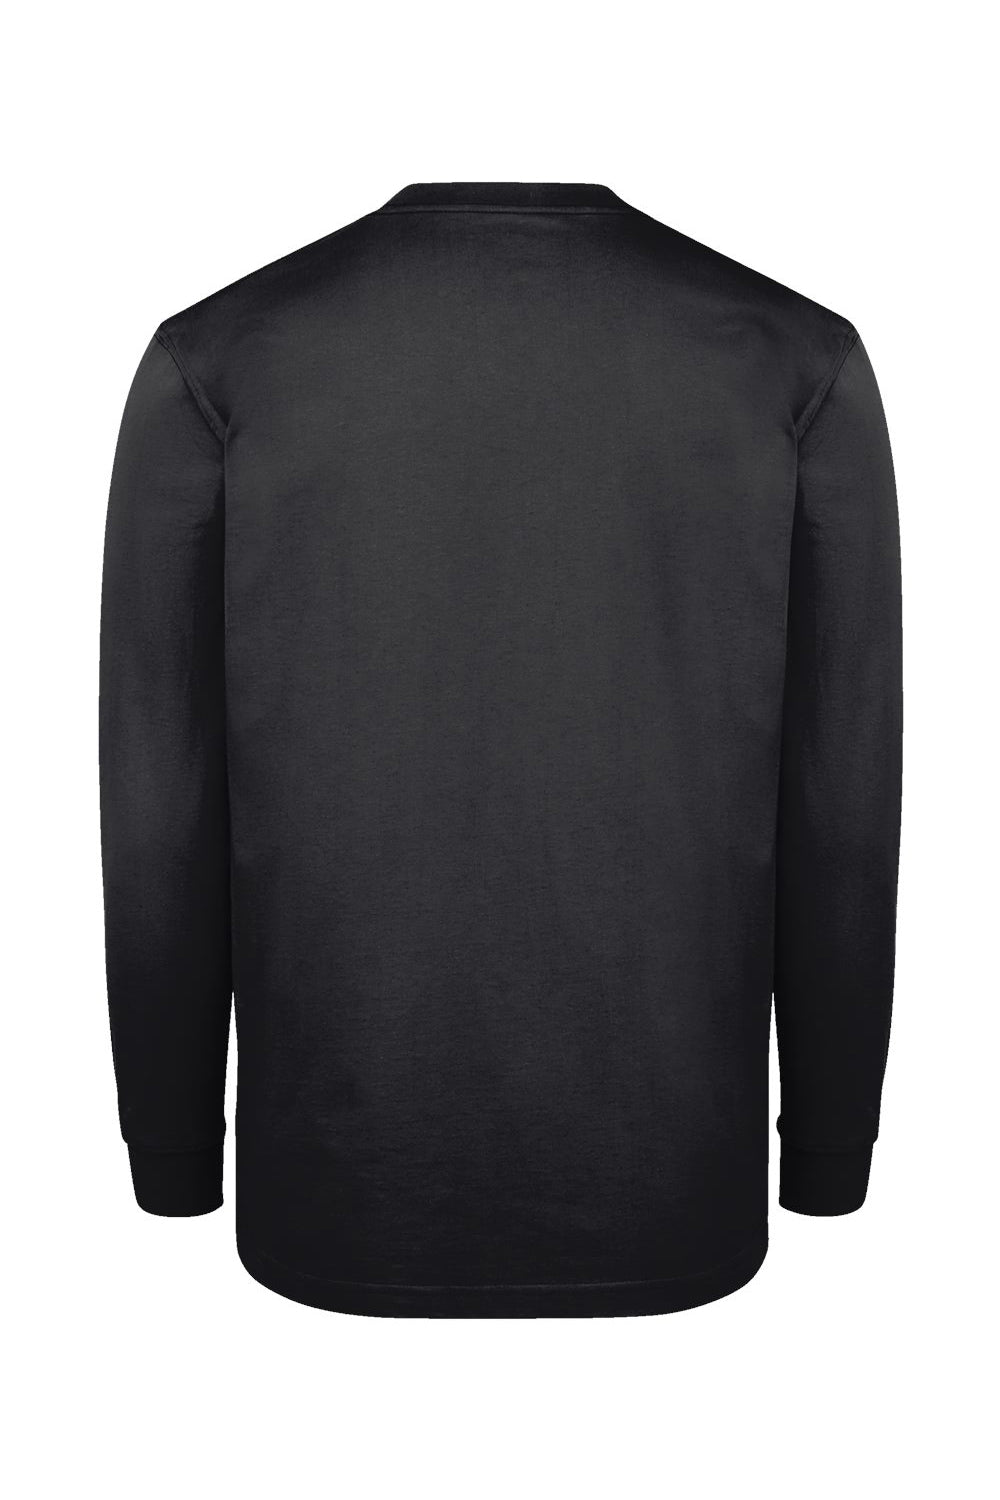 Dickies WL50 Mens Long Sleeve Crewneck T-Shirt w/ Pocket Black Flat Back